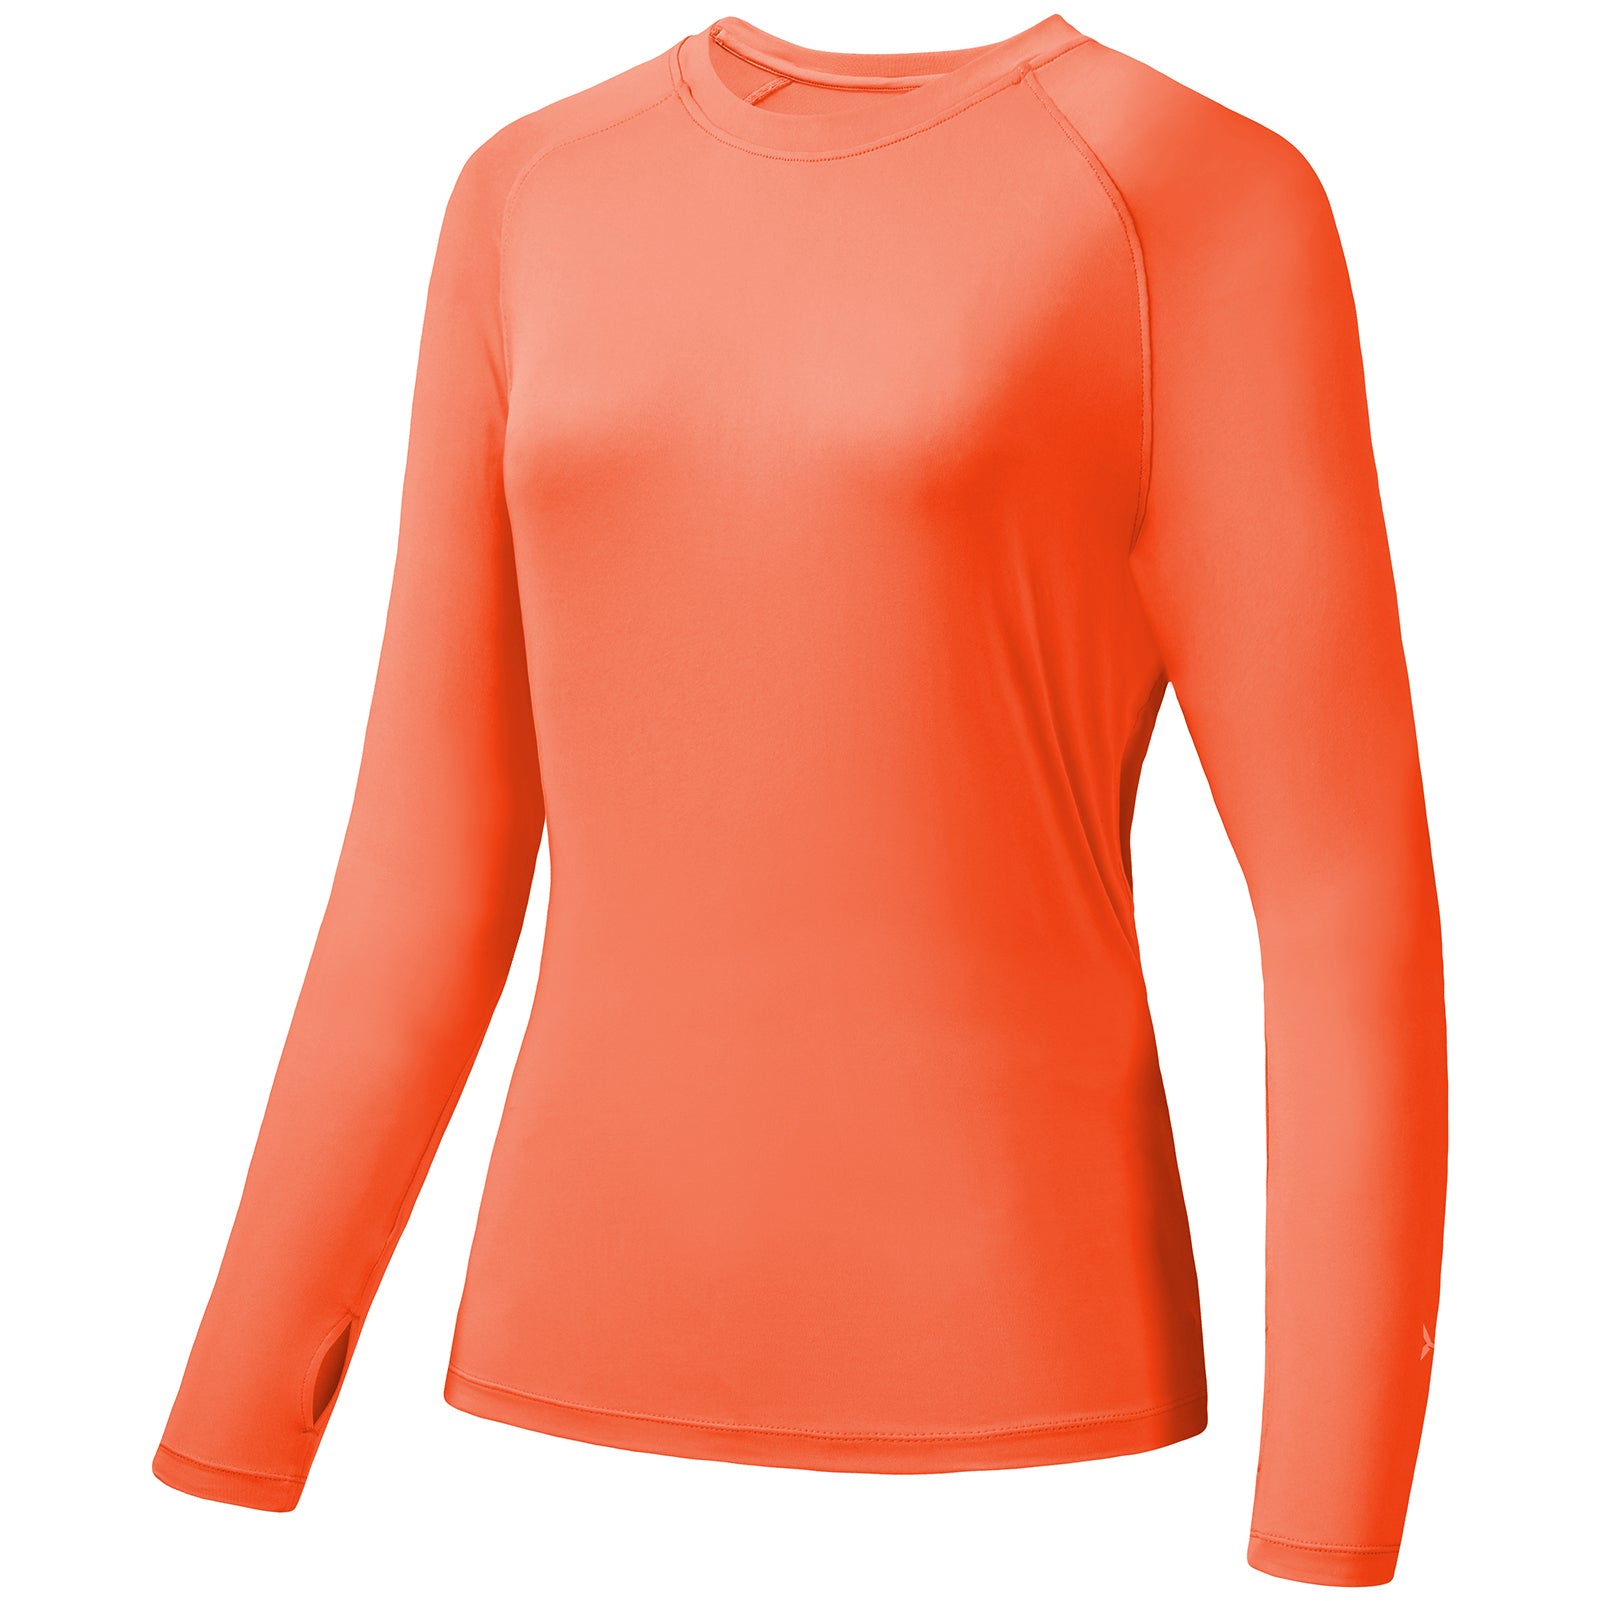 Bassdash Women’s UPF 50+ UV Sun Protection T-Shirt Long Sleeve Fishing Hiking Performance Shirts